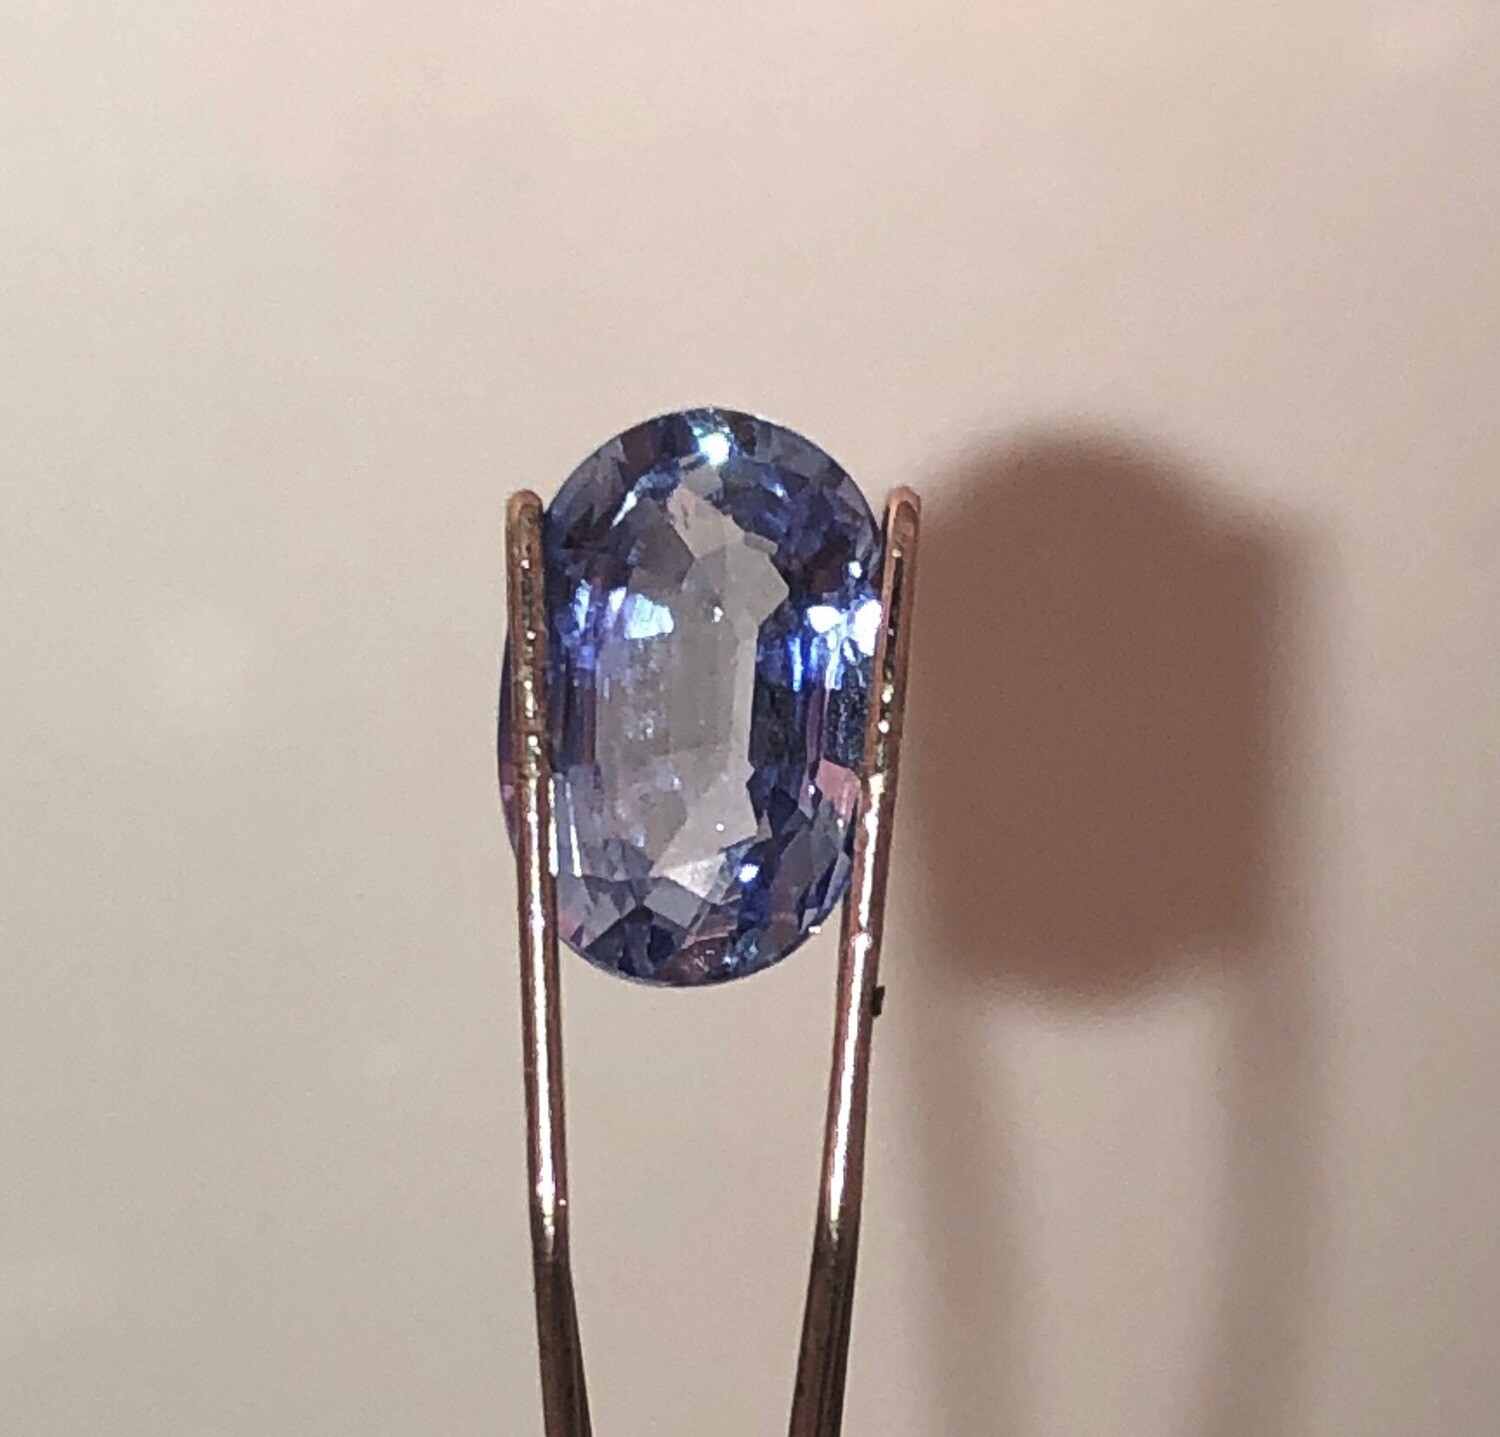 Blue Sapphire Certified By EGL - USA. Very Nice Light Blue (Steele) 1.14 ct Oval Cut Sapphire.